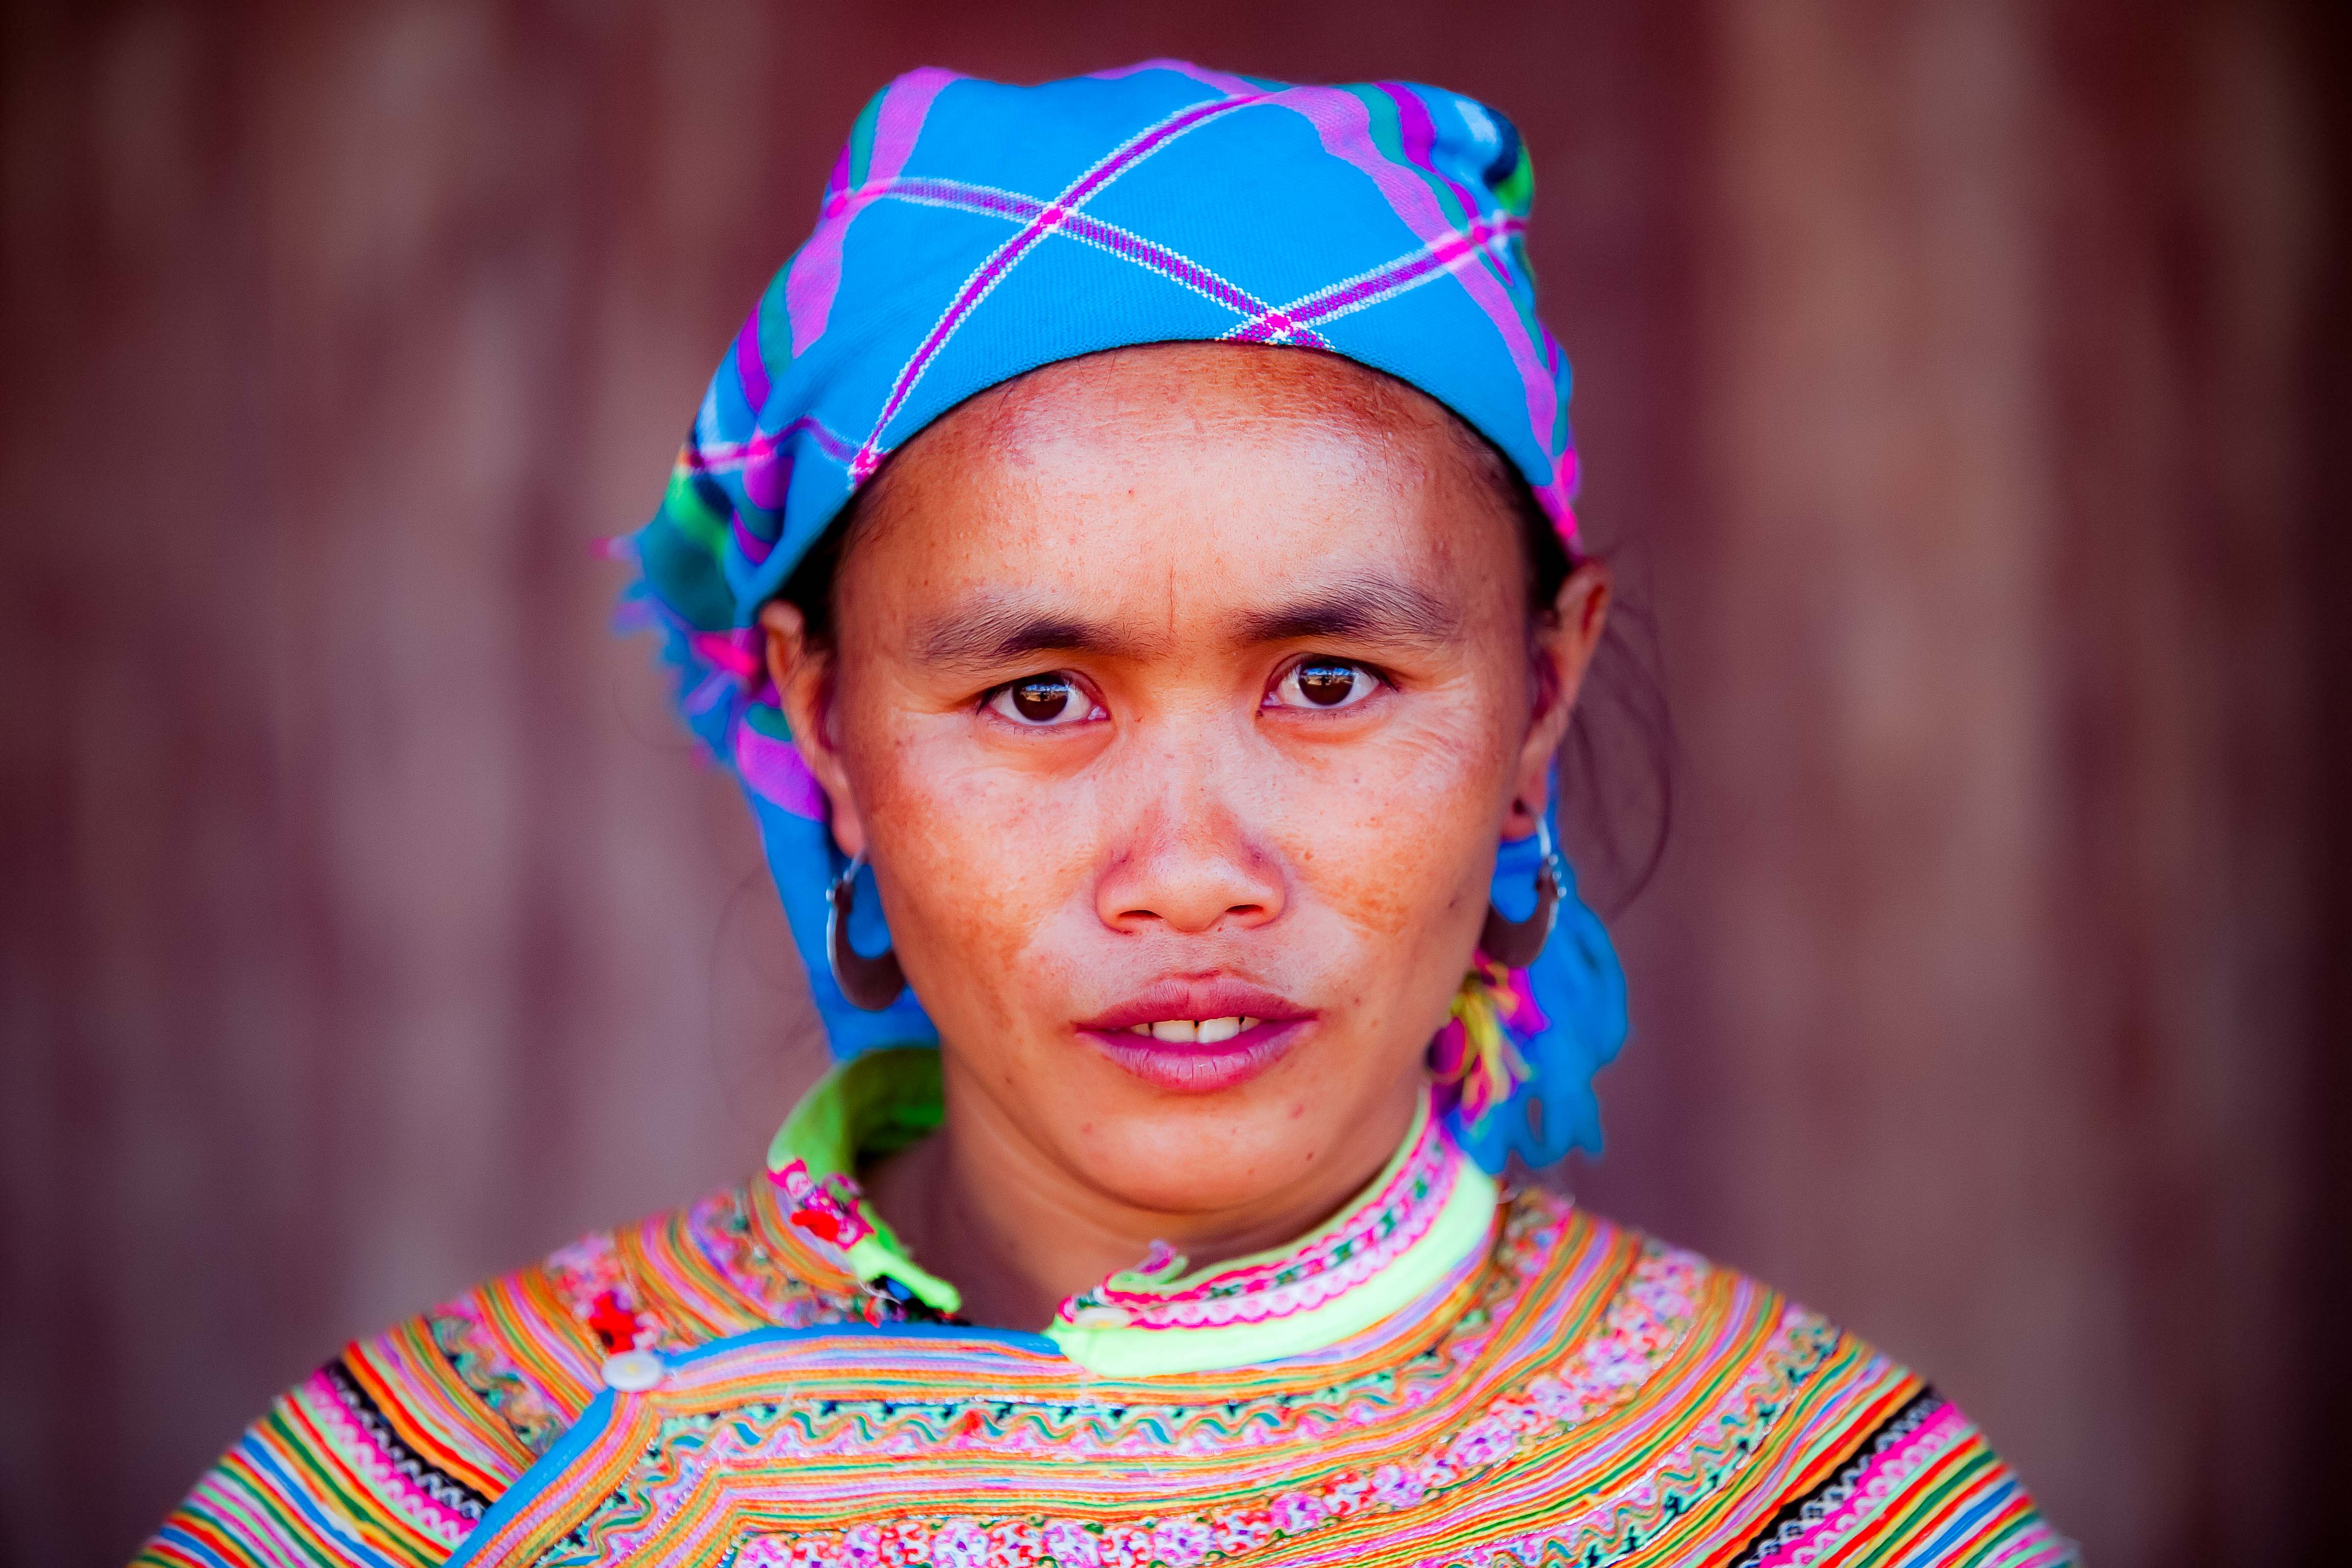 Vietnam, BinhPhuoc Prov, Tribal Clothes, 2010, img_0372